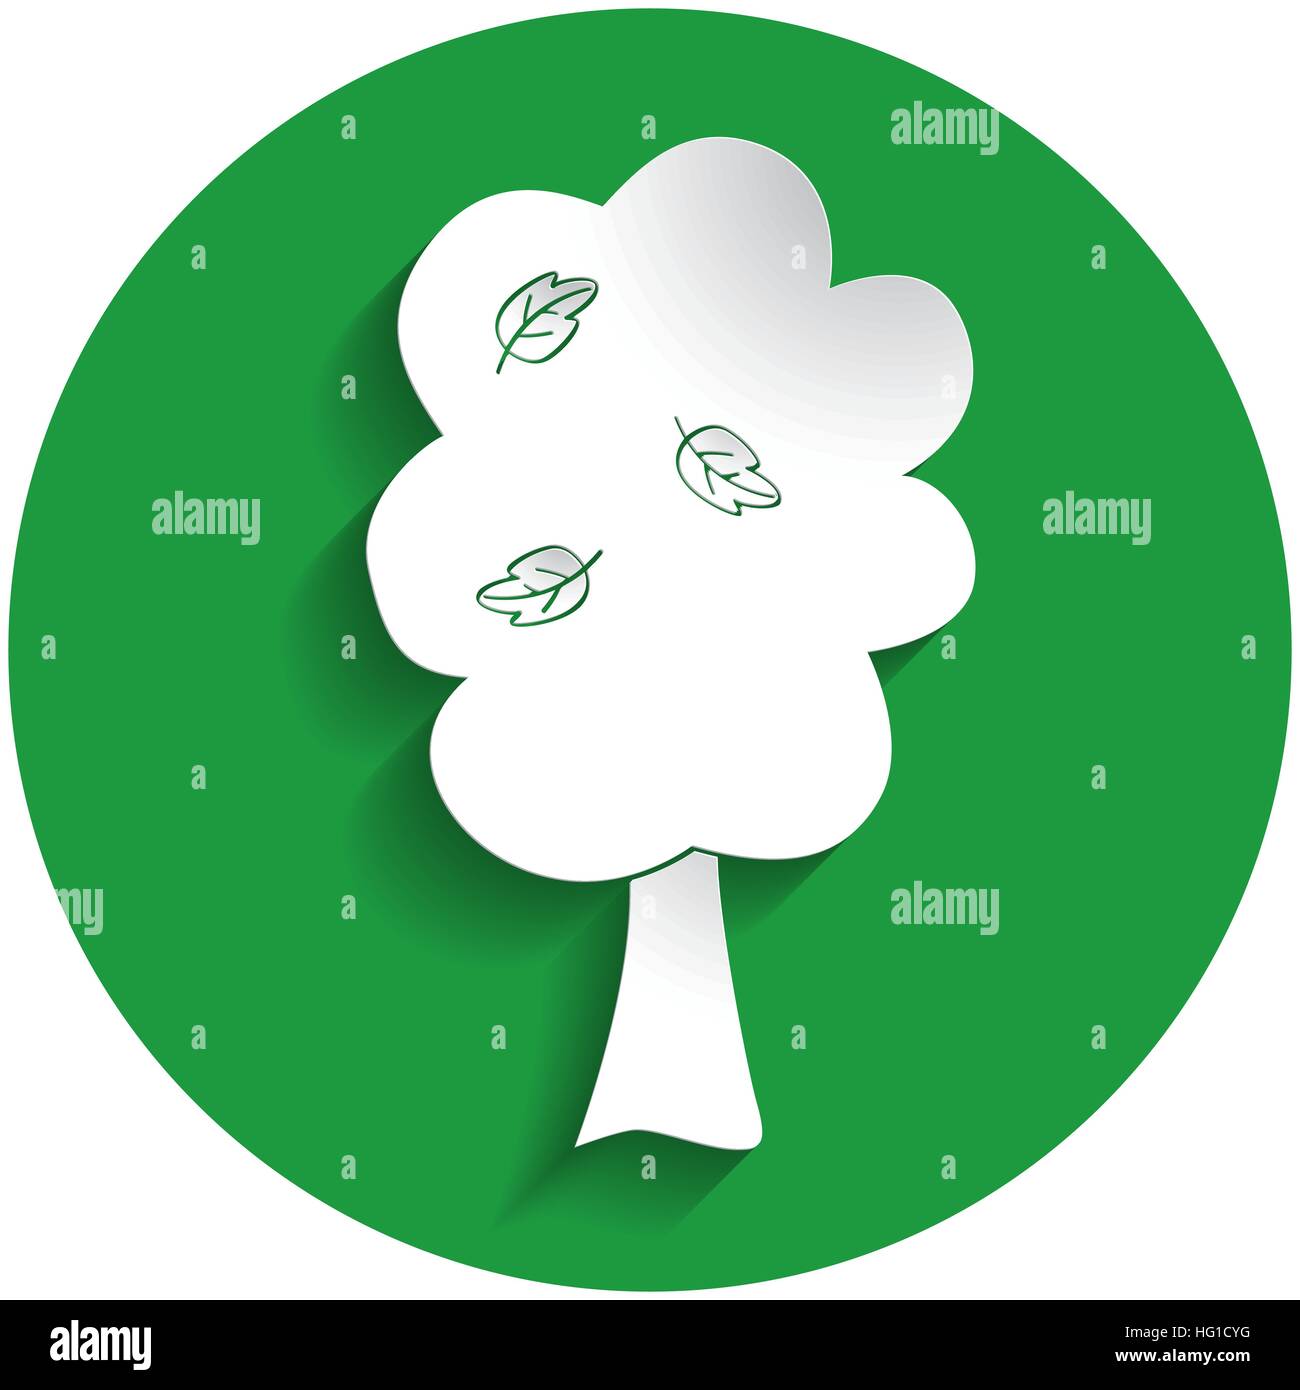 Obst Baum-Symbol im Papier Stil auf grünen Kreis Stock Vektor